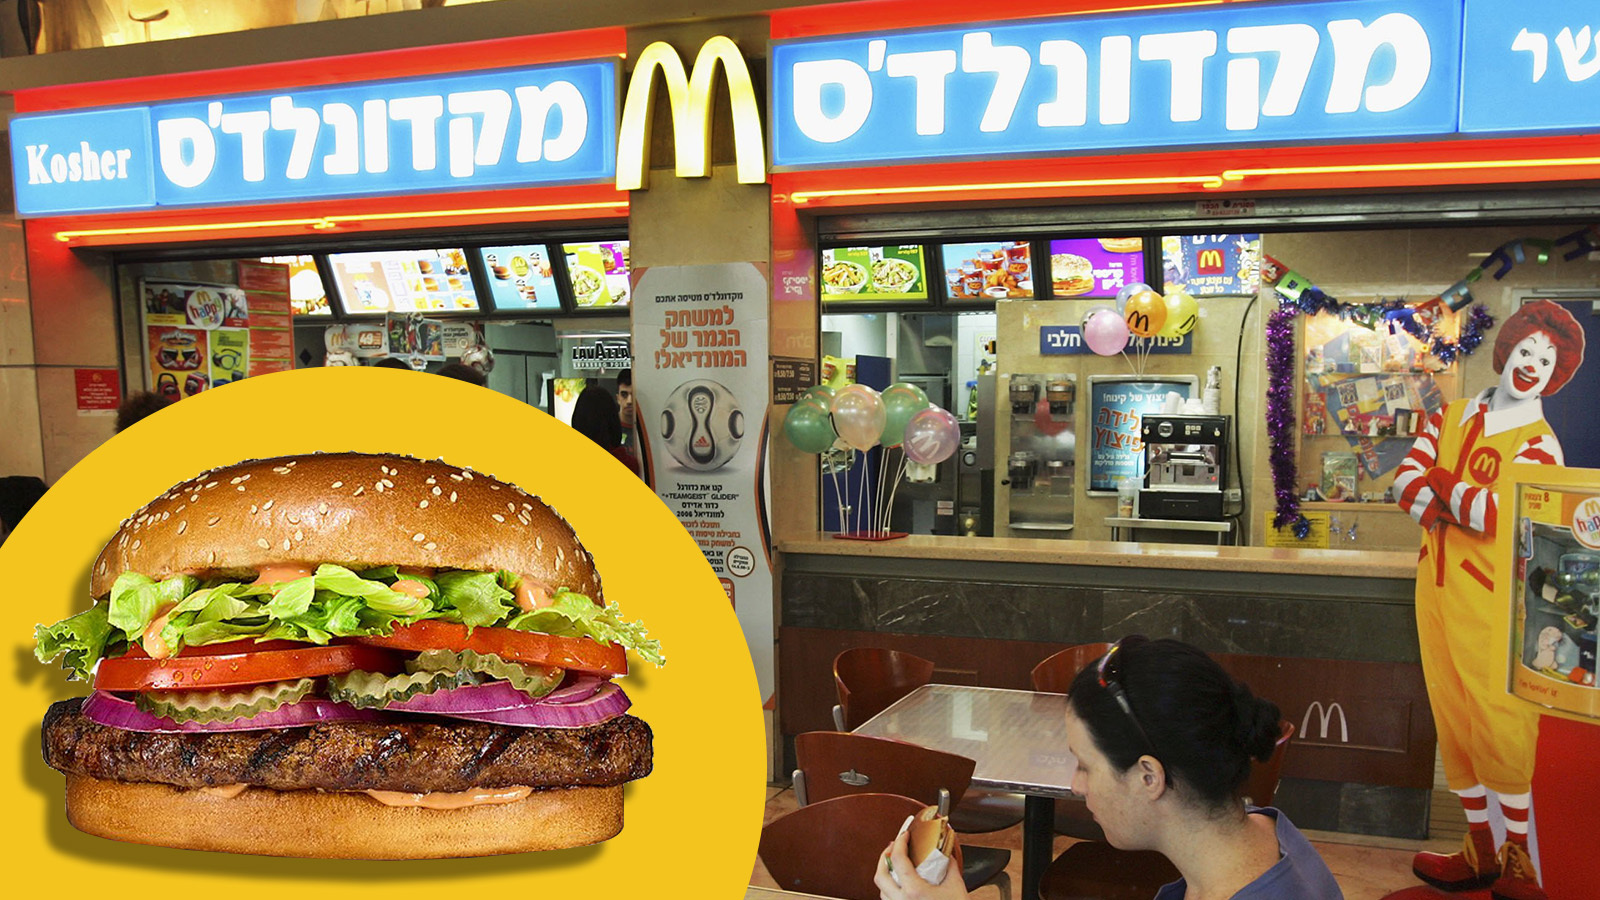 Is McDonald's Israel product?